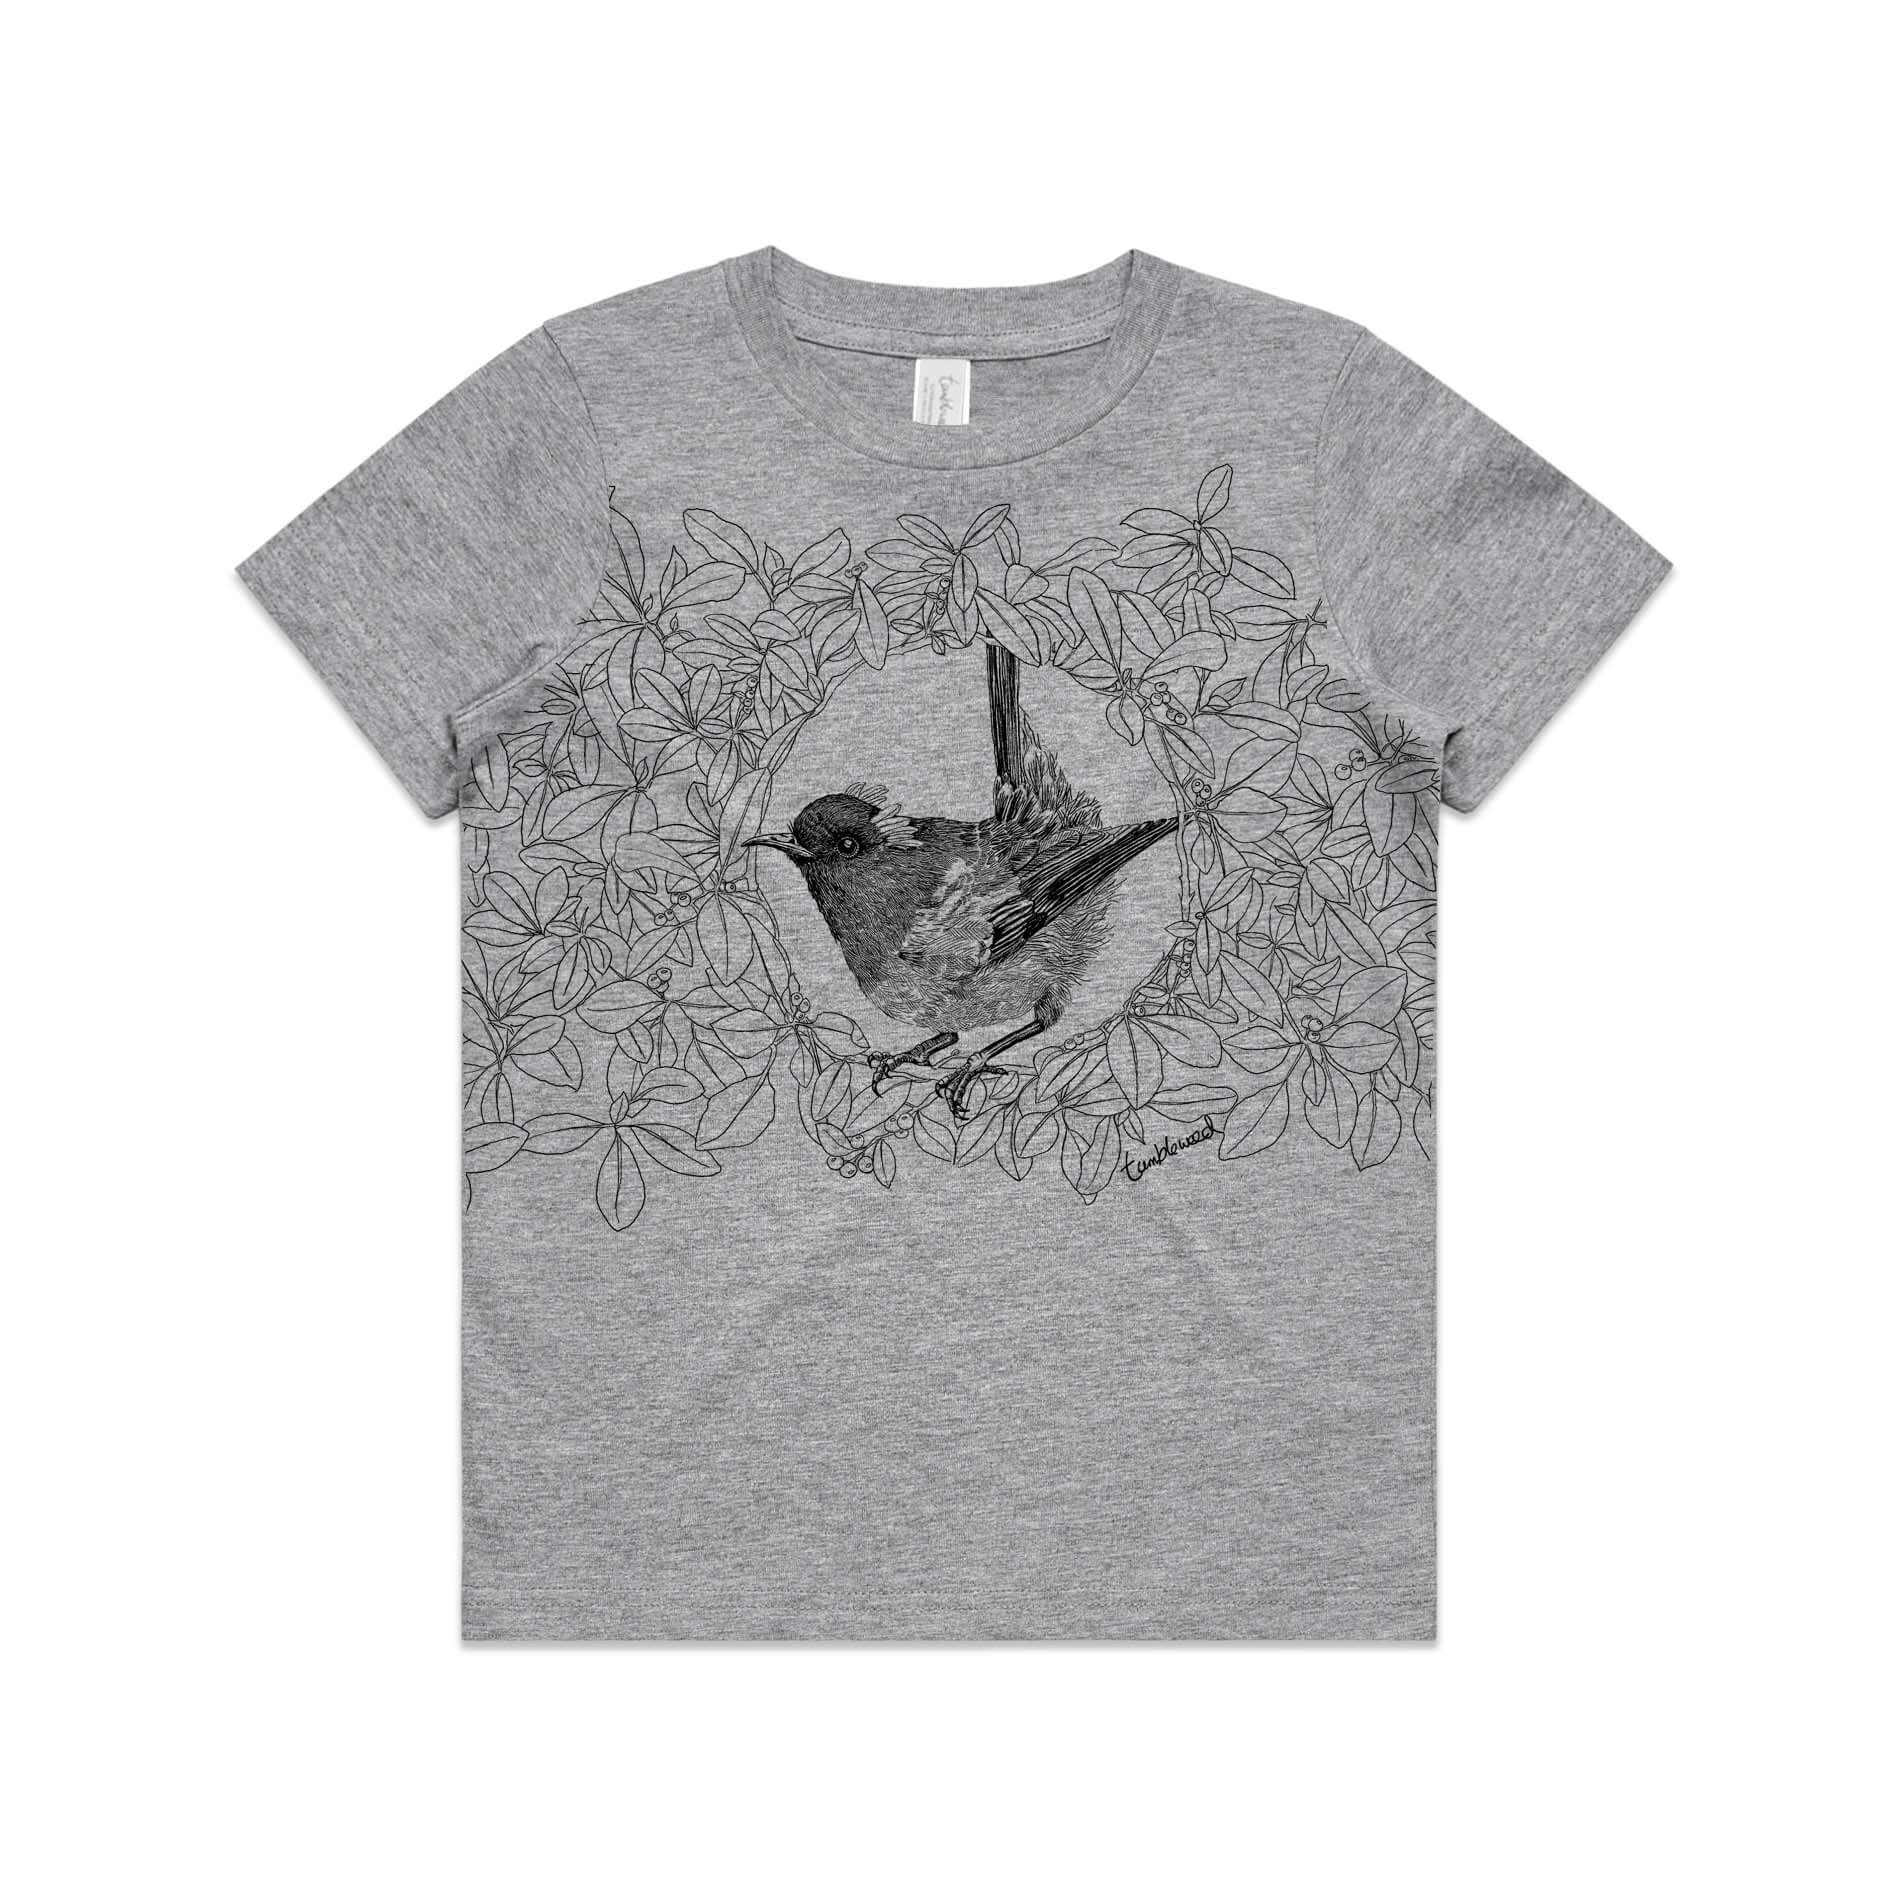 Grey marle, cotton kids' t-shirt with screen printed Kids hihi/stitchbird design.